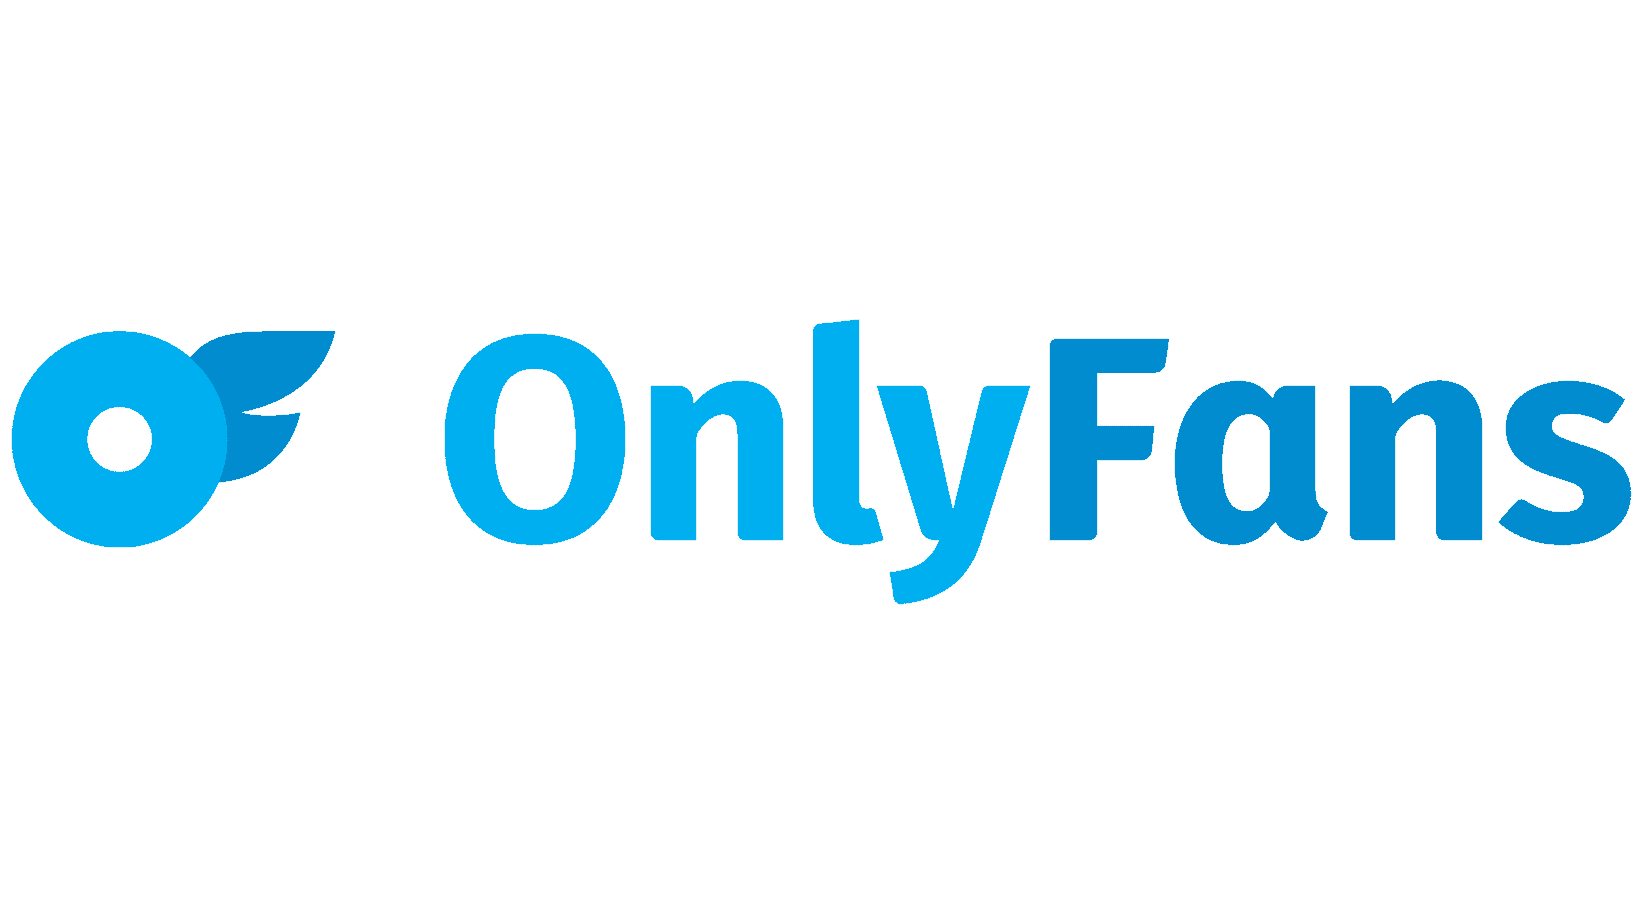 OnlyFans-Logo